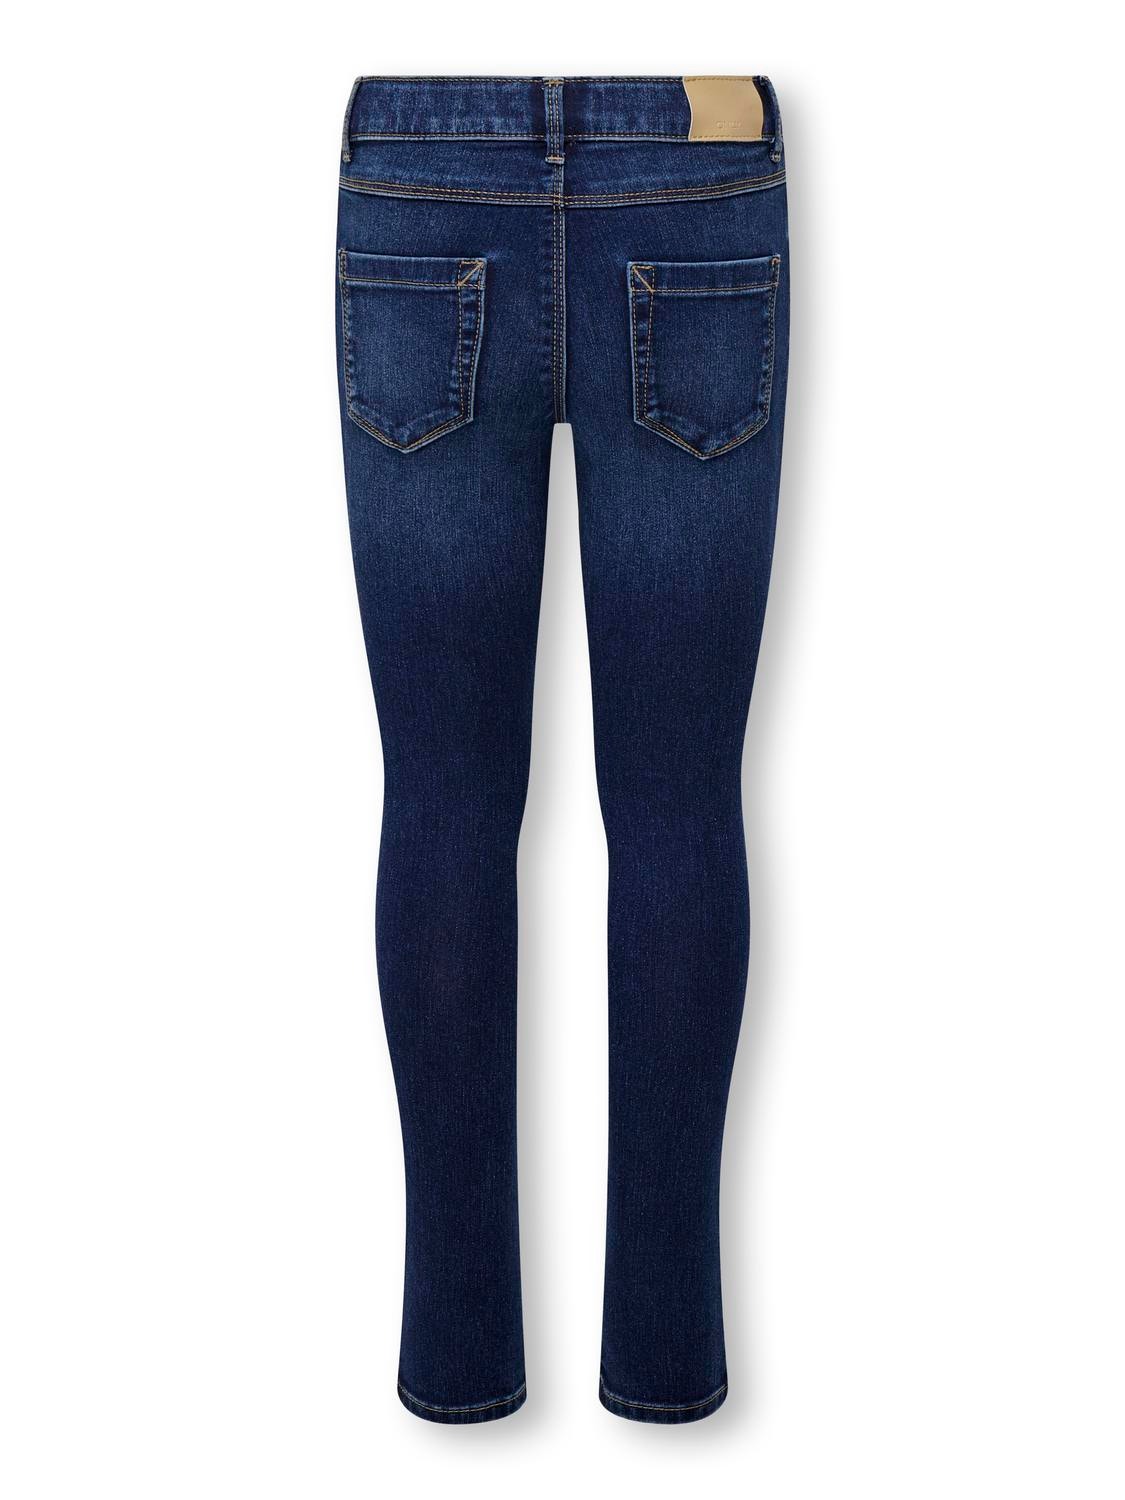 ONLY Skinny Fit Jeans -Dark Blue Denim - 15322758